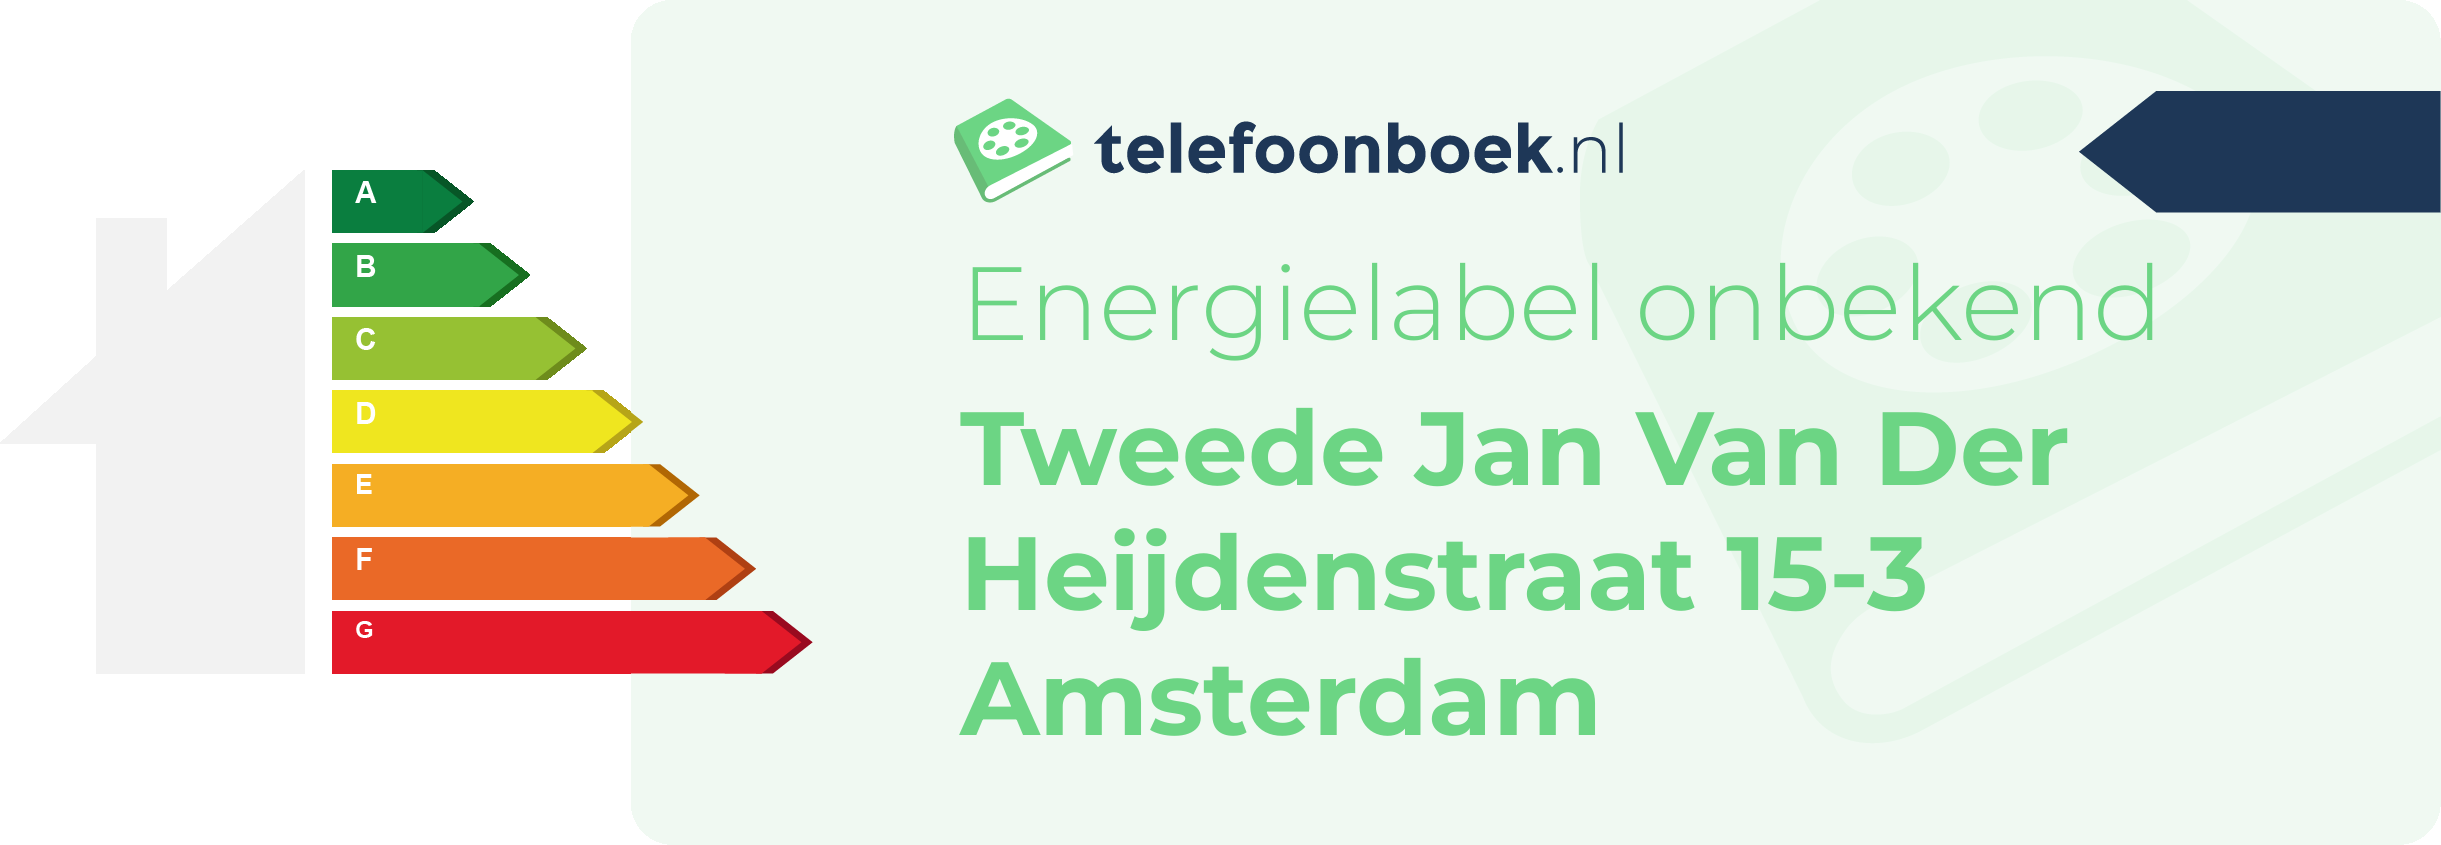 Energielabel Tweede Jan Van Der Heijdenstraat 15-3 Amsterdam